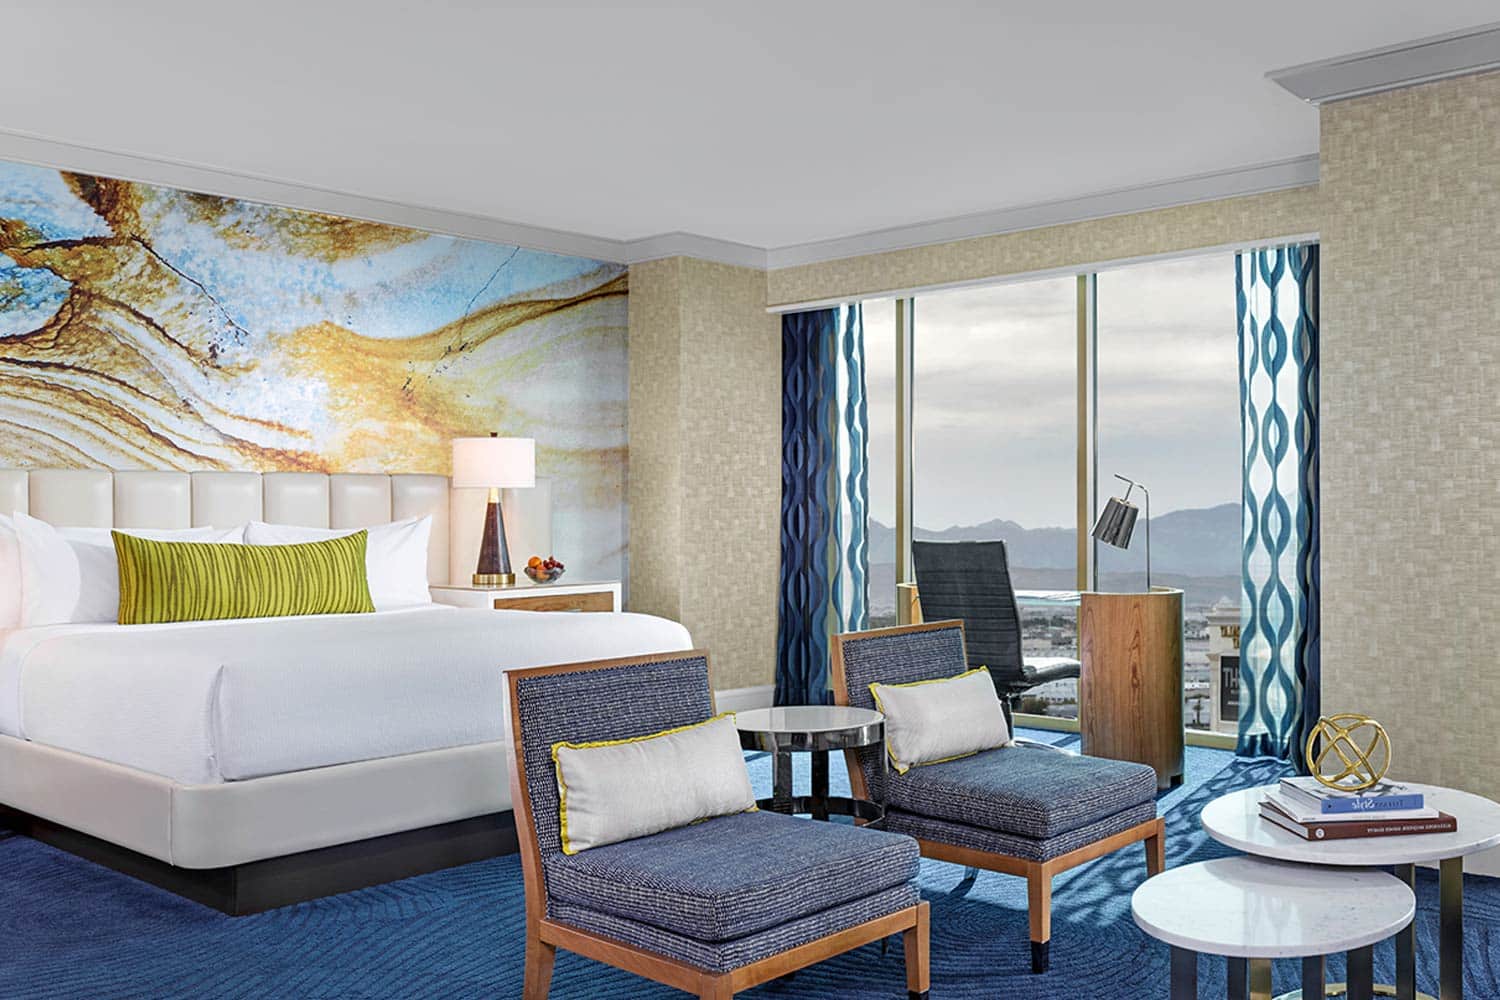 Mandalay Bay Las Vegas Hotel: Suites, Restaurants, Shows & Pool